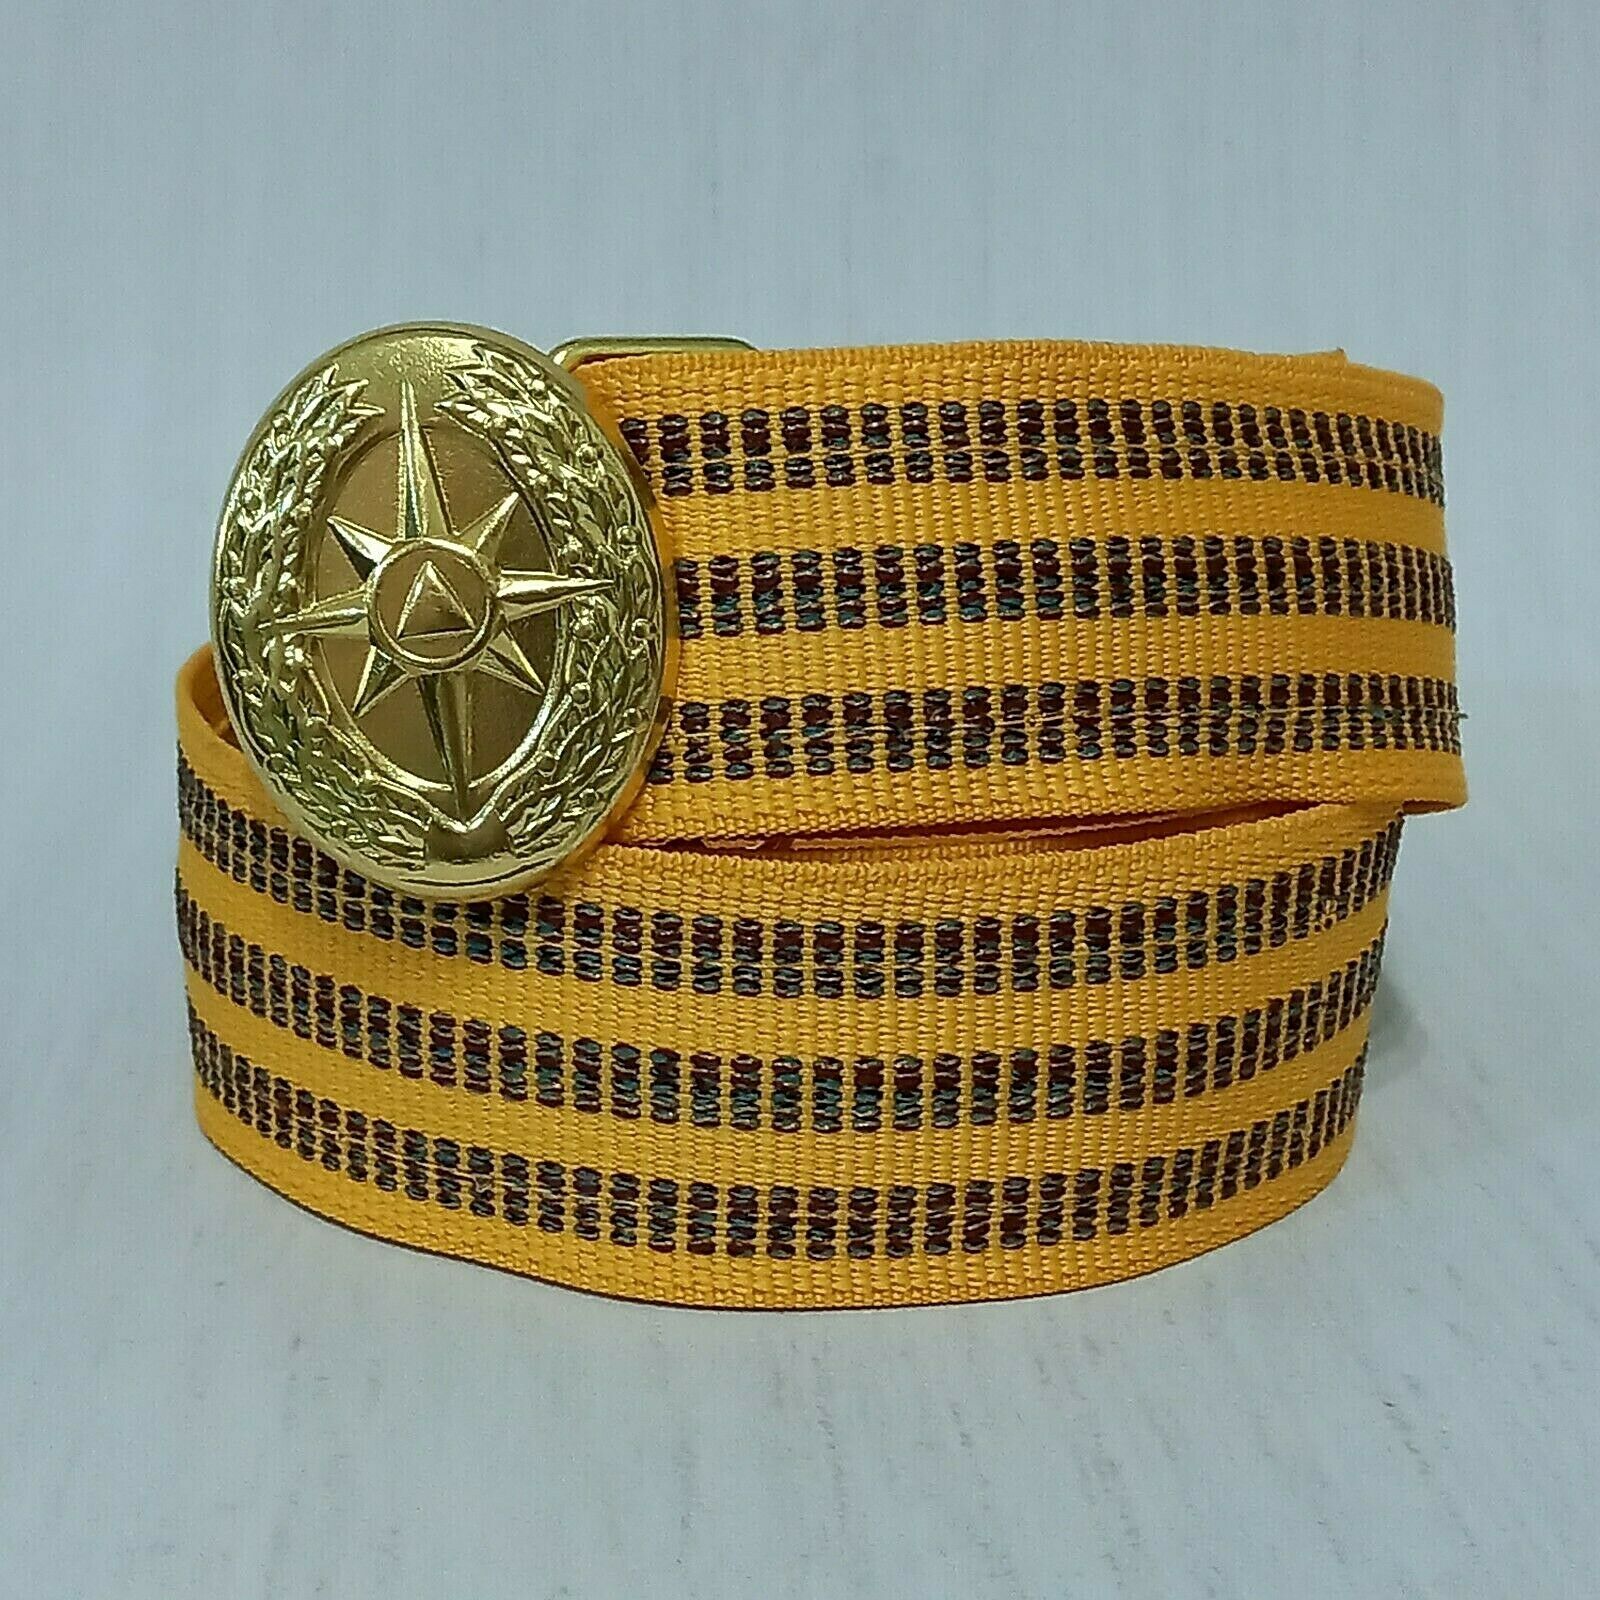 Belt Parade Officer Star Emercom Of Russia Yellow №2 110 Cm - 43.3 Inch